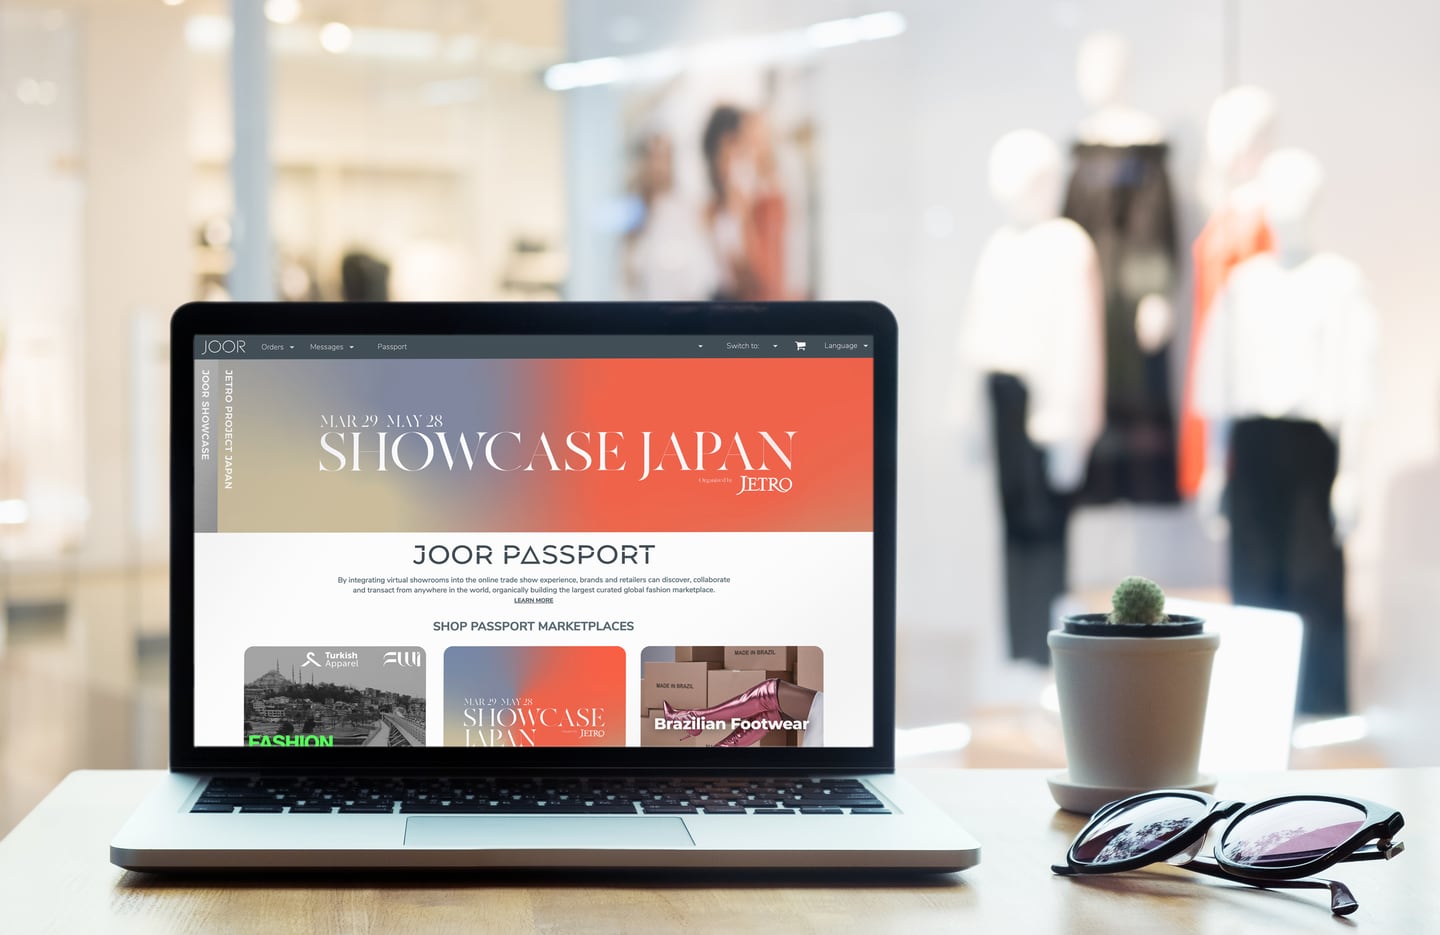 Showcase Japan, the product of Joor's partnership with JETRO. Joor.